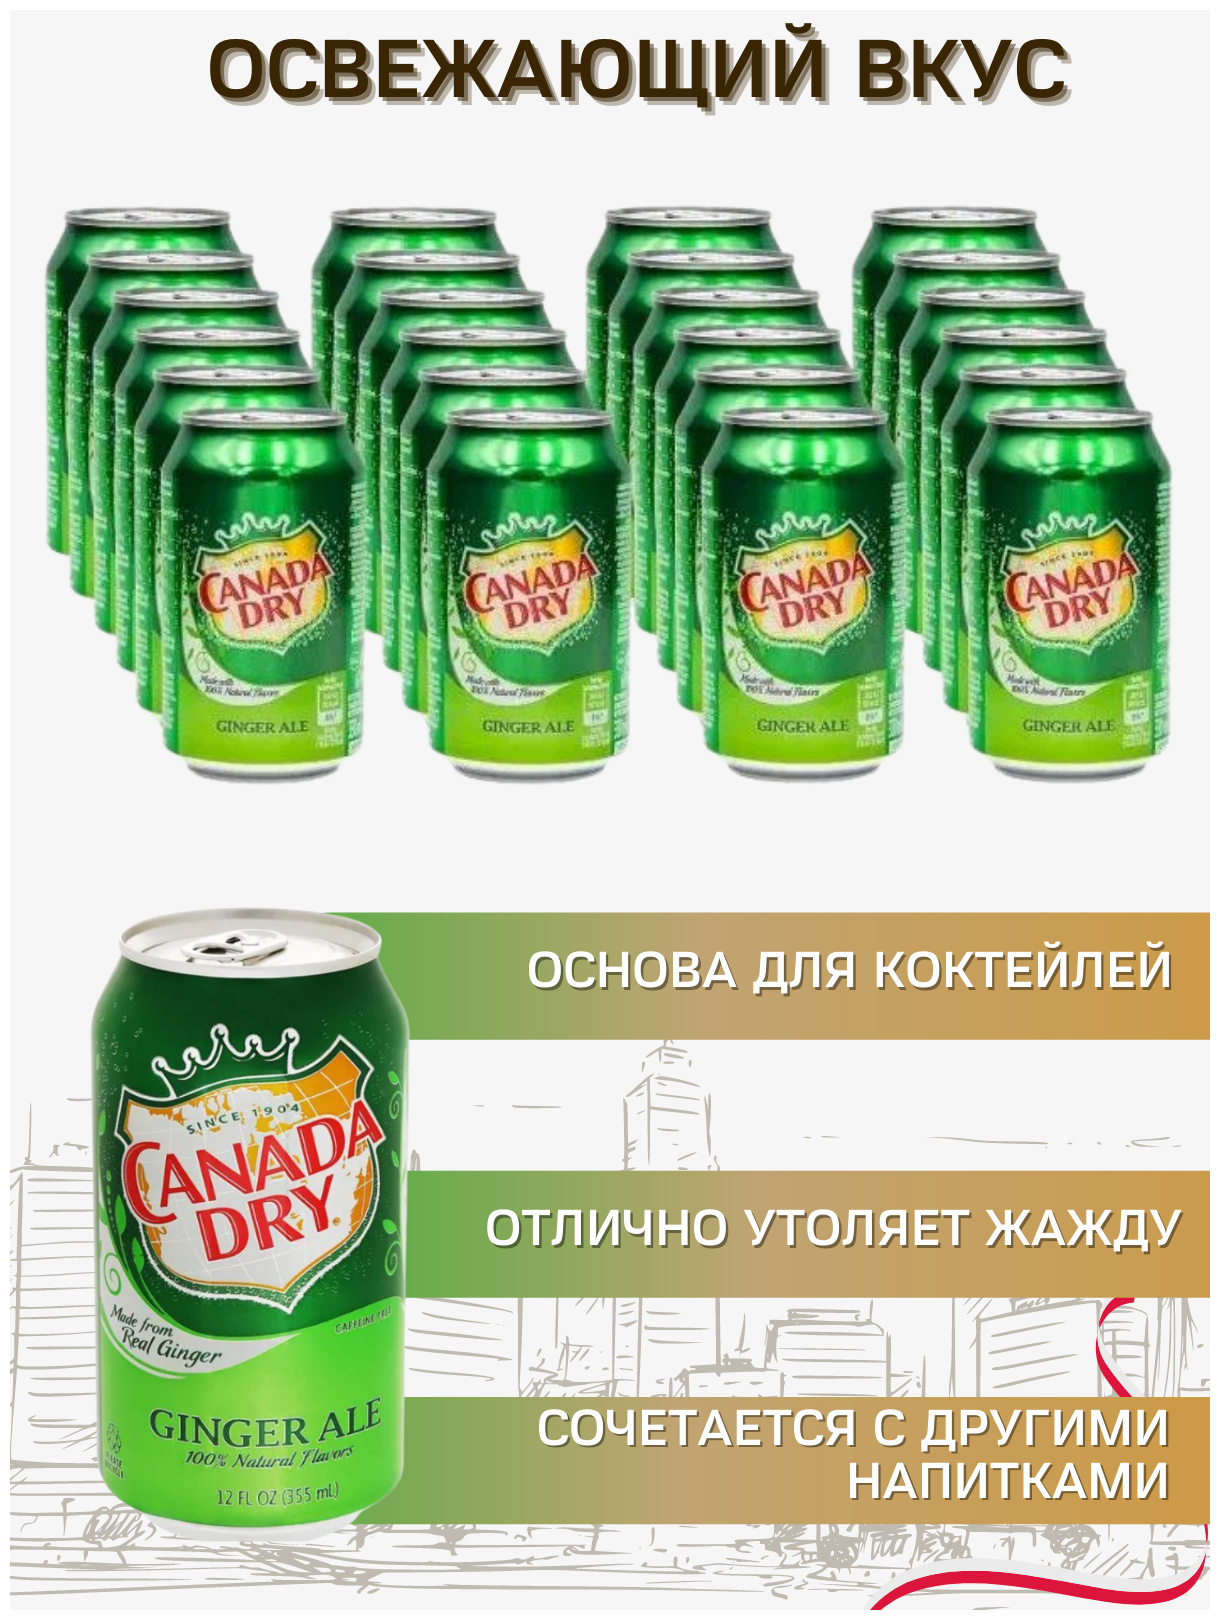 Canada Dry Ginger Ale 0.33л Упаковка 24 шт - фотография № 4